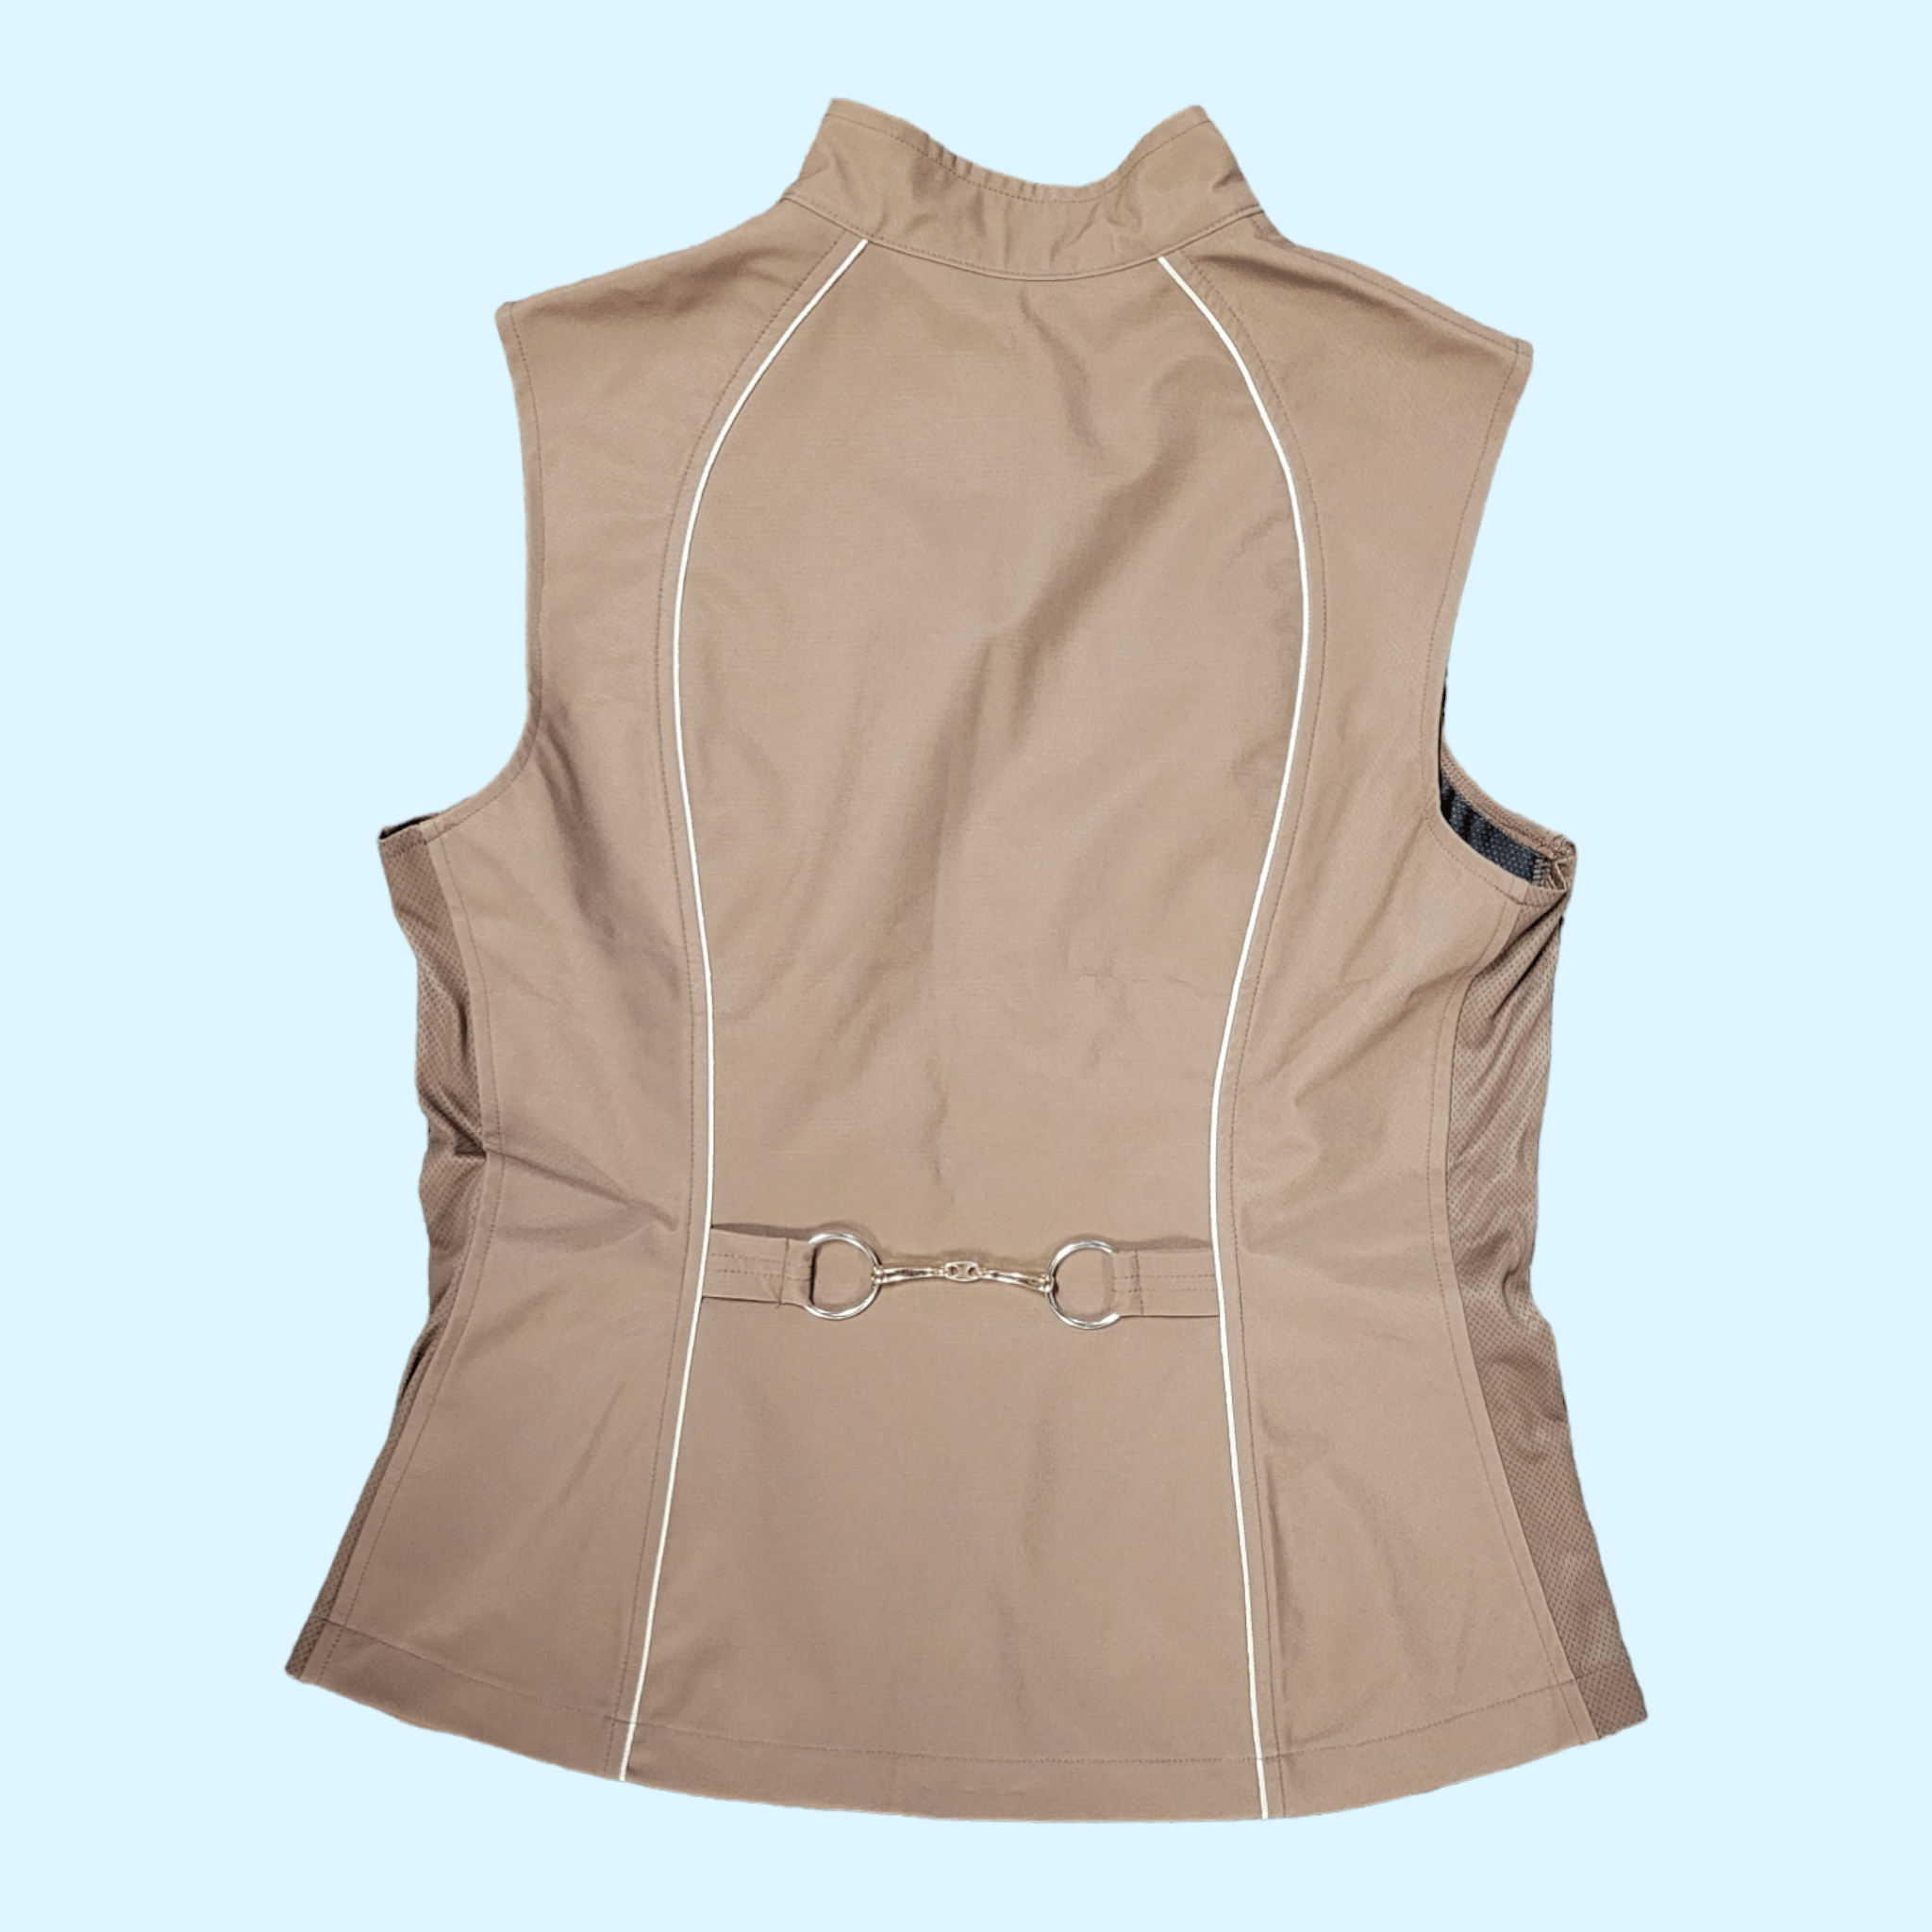 Arista Iconic Bit Vest in Light Brown - Large